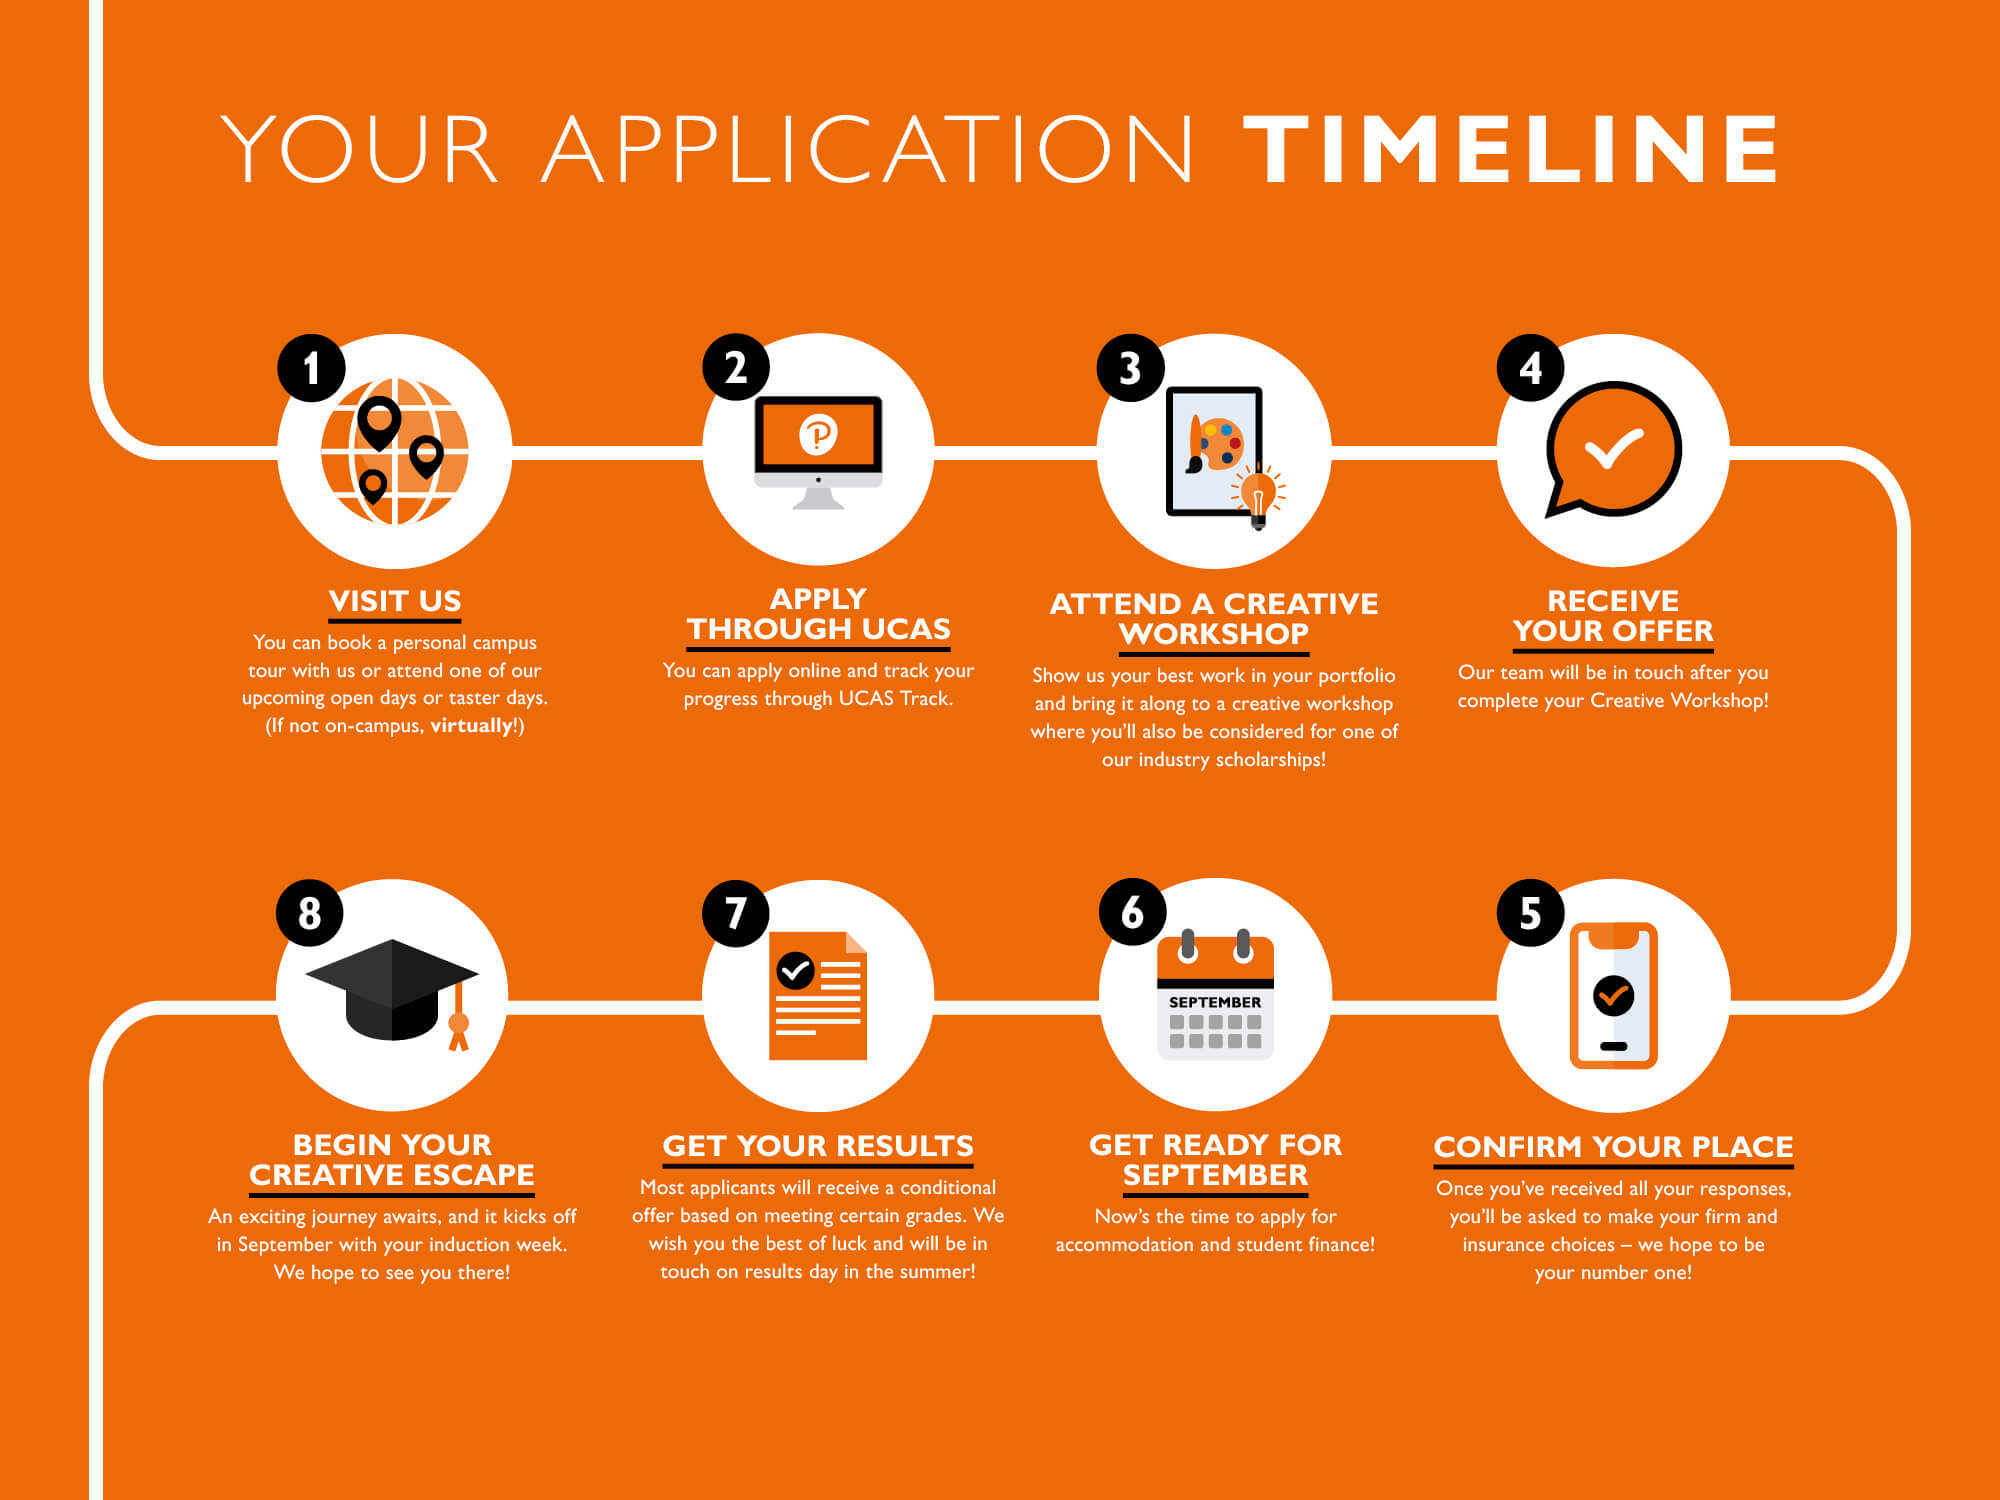 Your application timeline